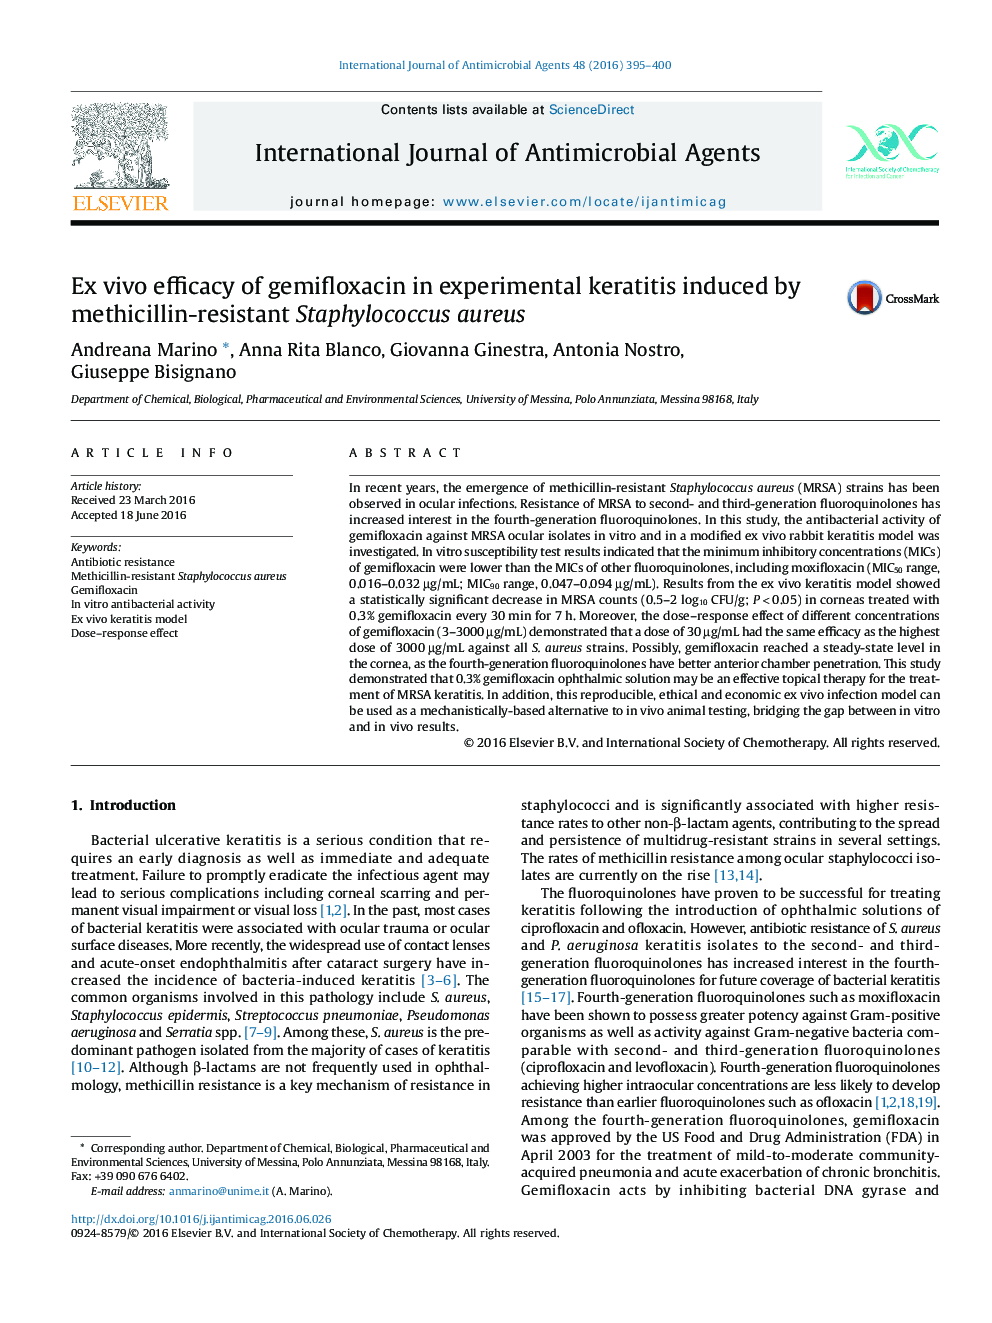 Ex vivo efficacy of gemifloxacin in experimental keratitis induced by methicillin-resistant Staphylococcus aureus